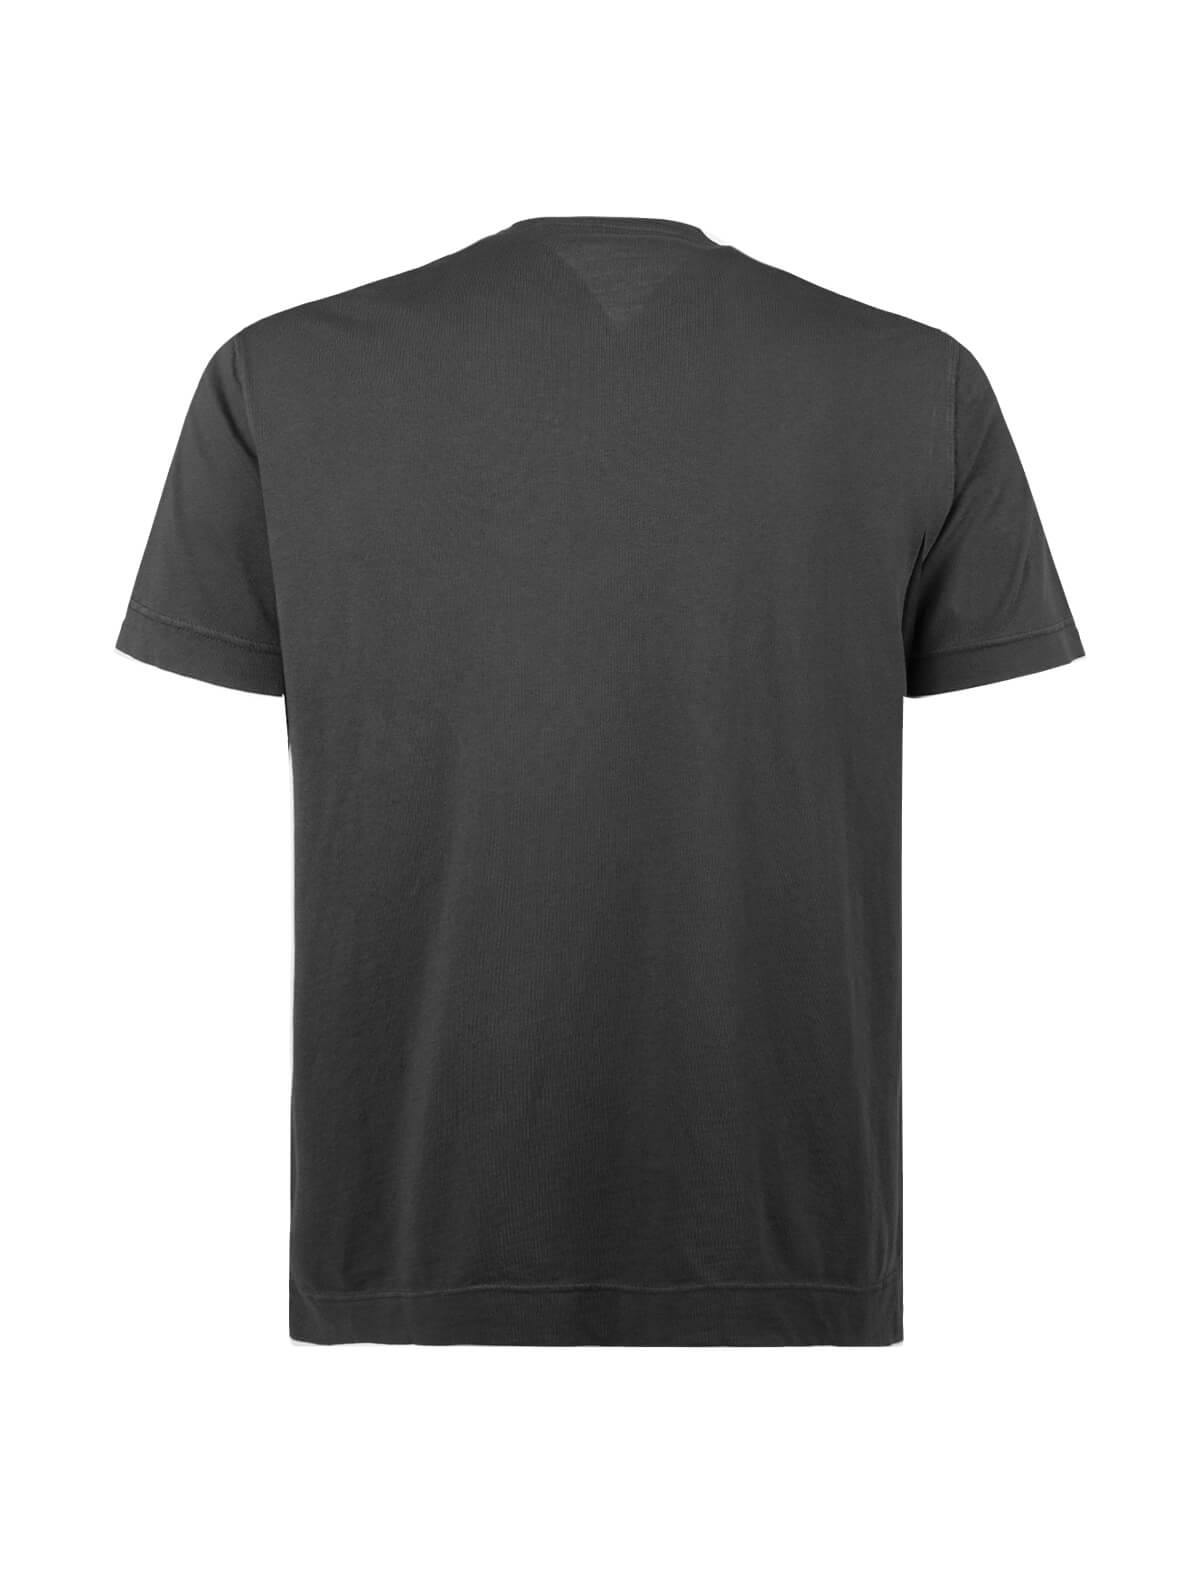 CIRCOLO 1901 Crew Neck Cotton T-Shirt in Black | CLOSET Singapore